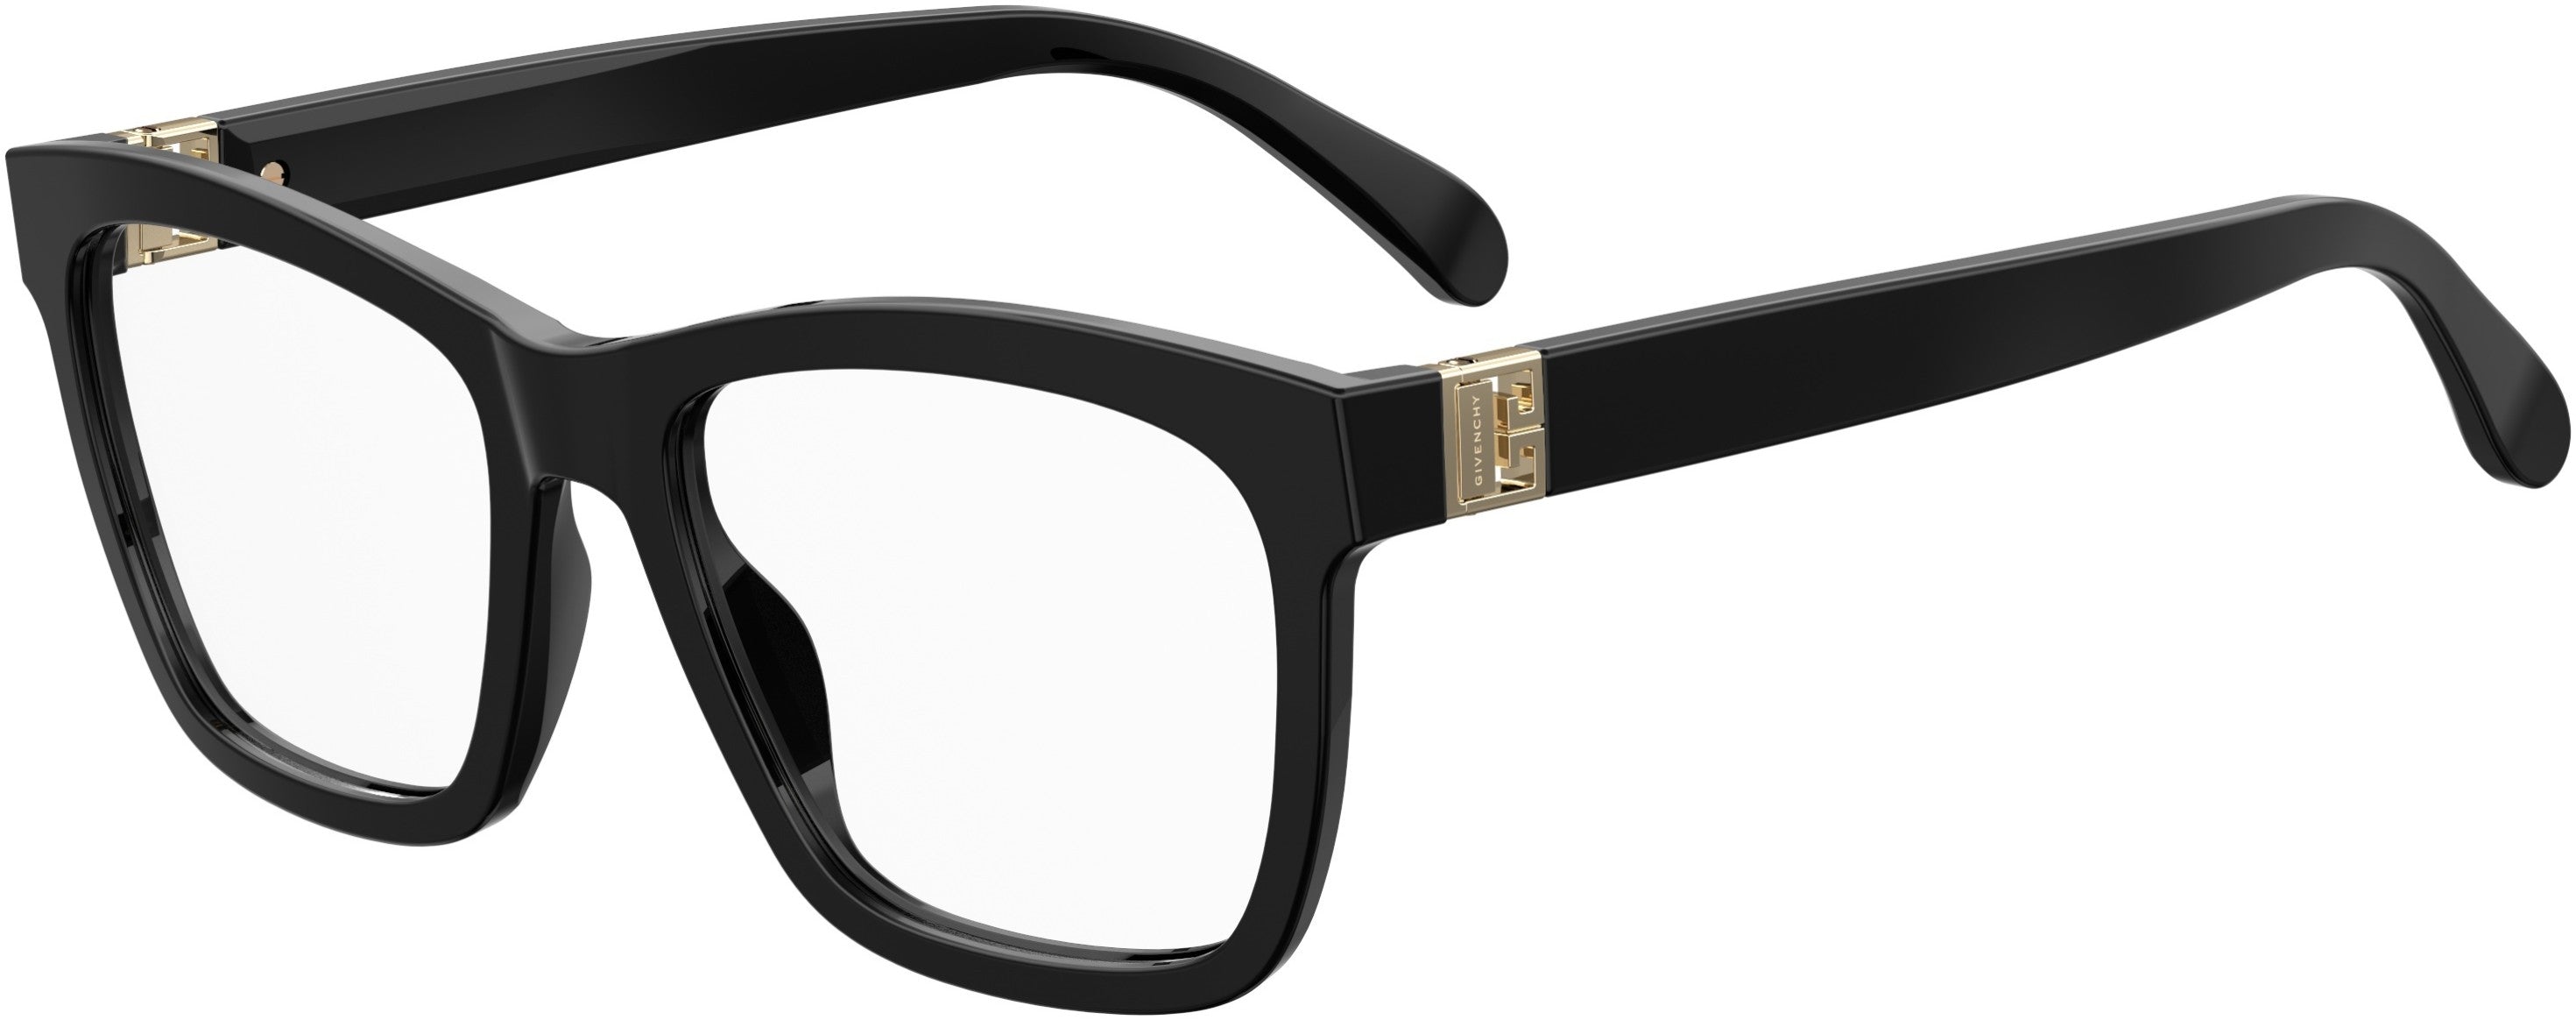  Givenchy 0112 Rectangular Eyeglasses 0807-0807  Black (00 Demo Lens)